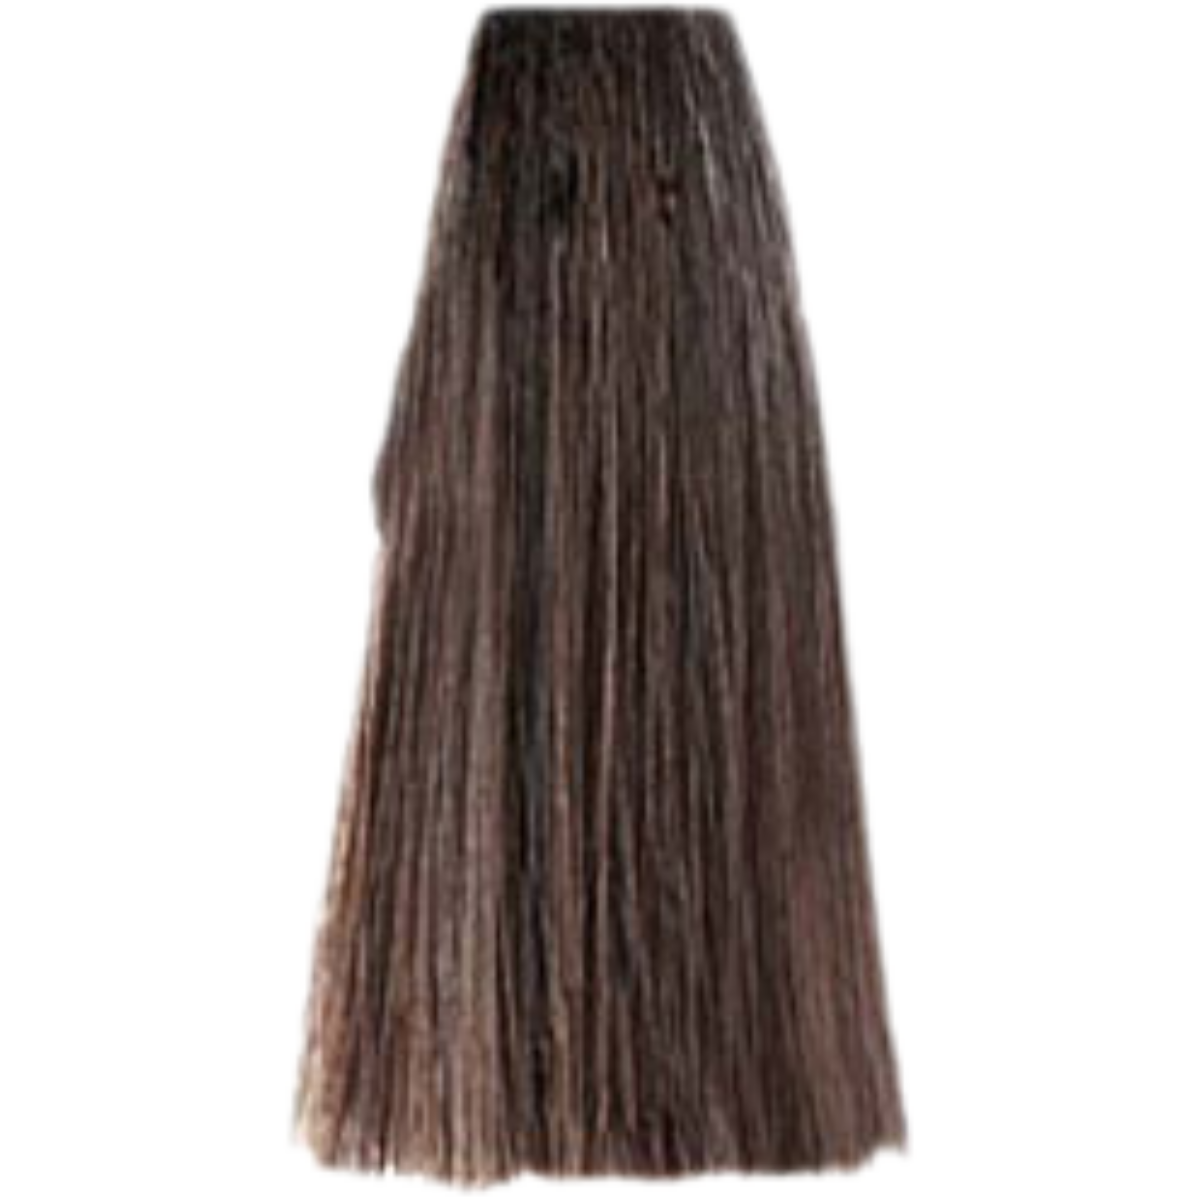 צבע שיער בסיס 7.00 INTENSE BLONDE פארמויטה FarmaVita צבע לשיער 100 גרם